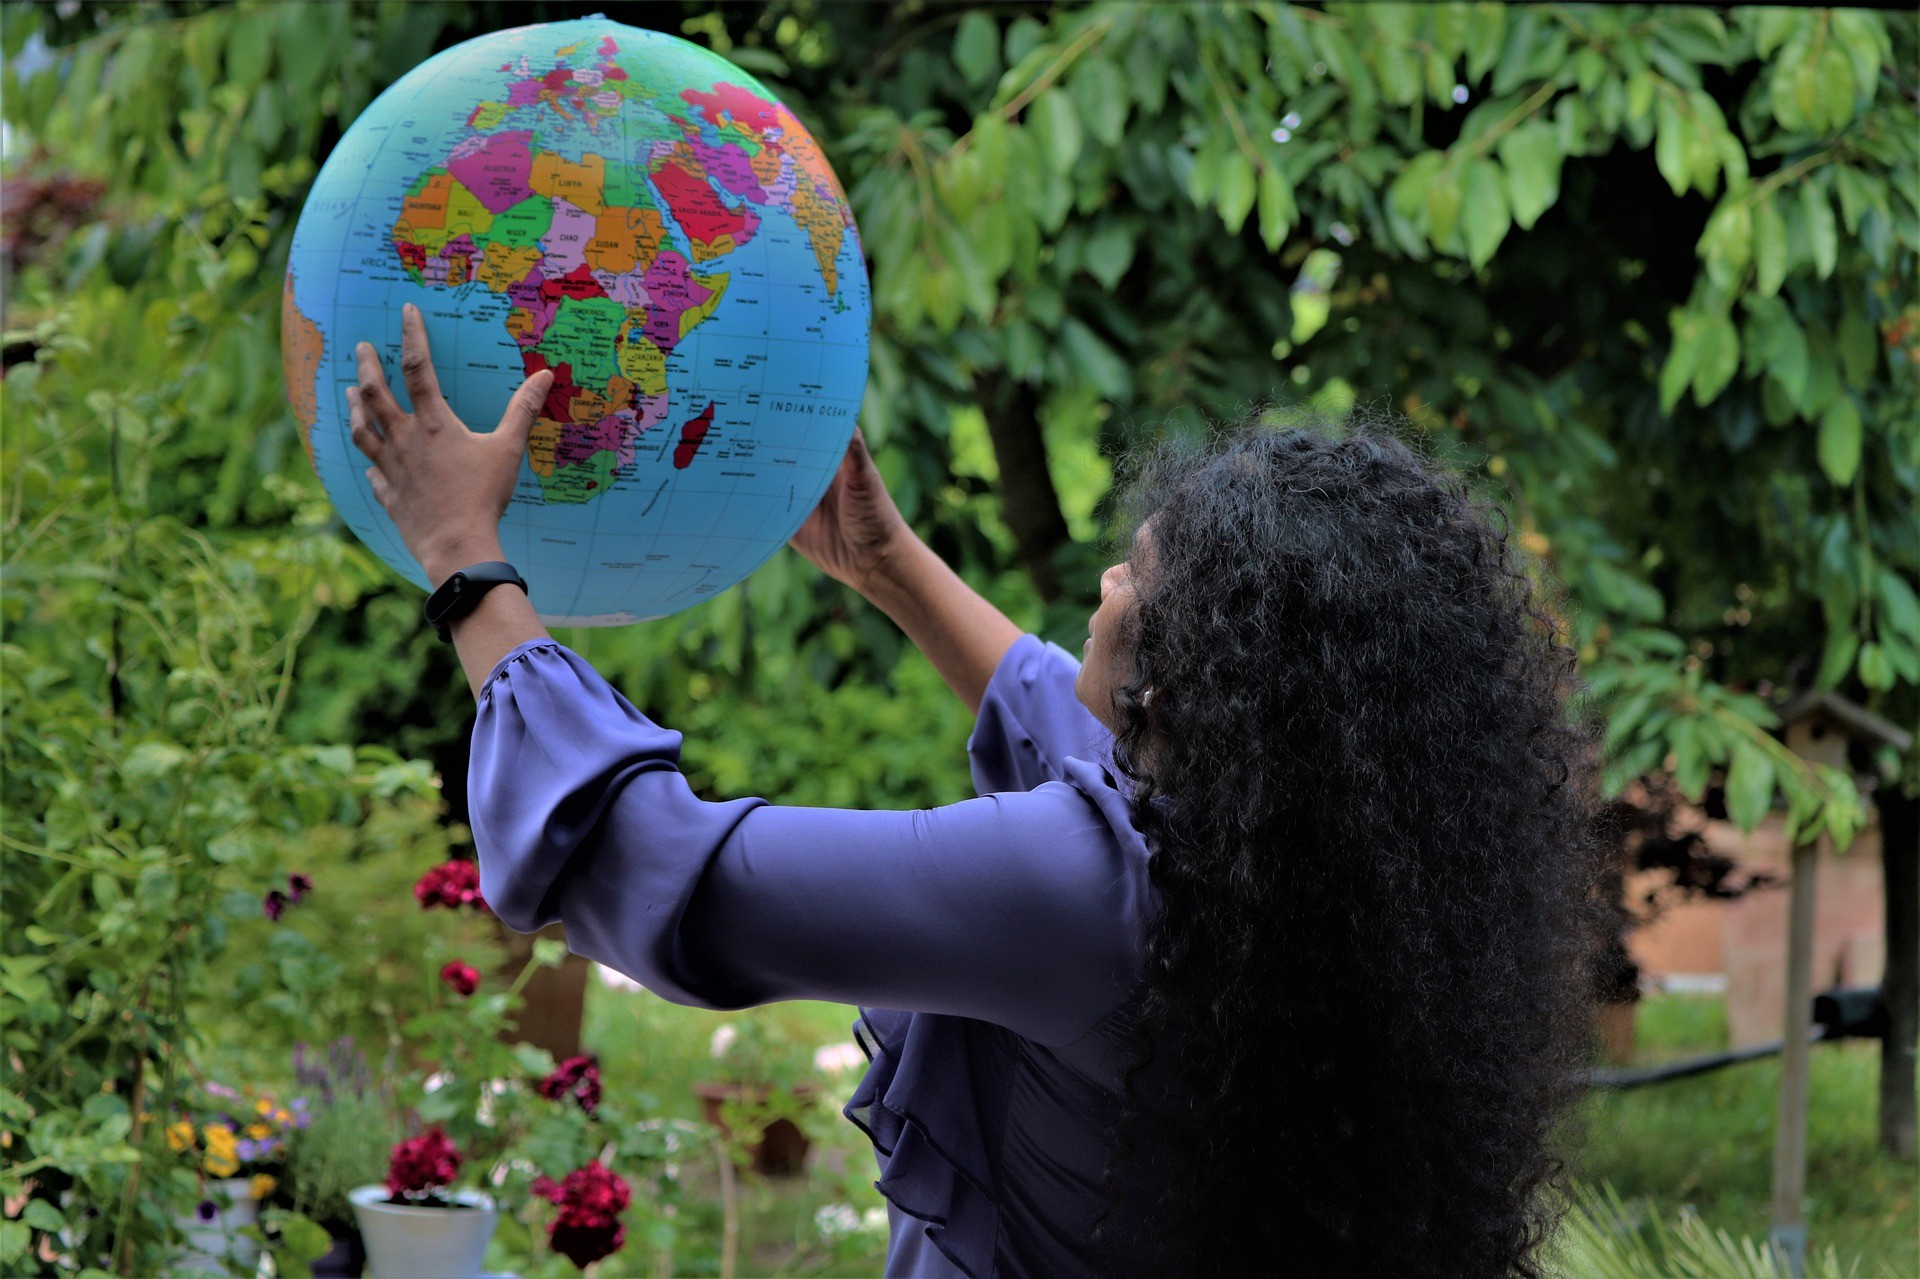 Woman holding a globe